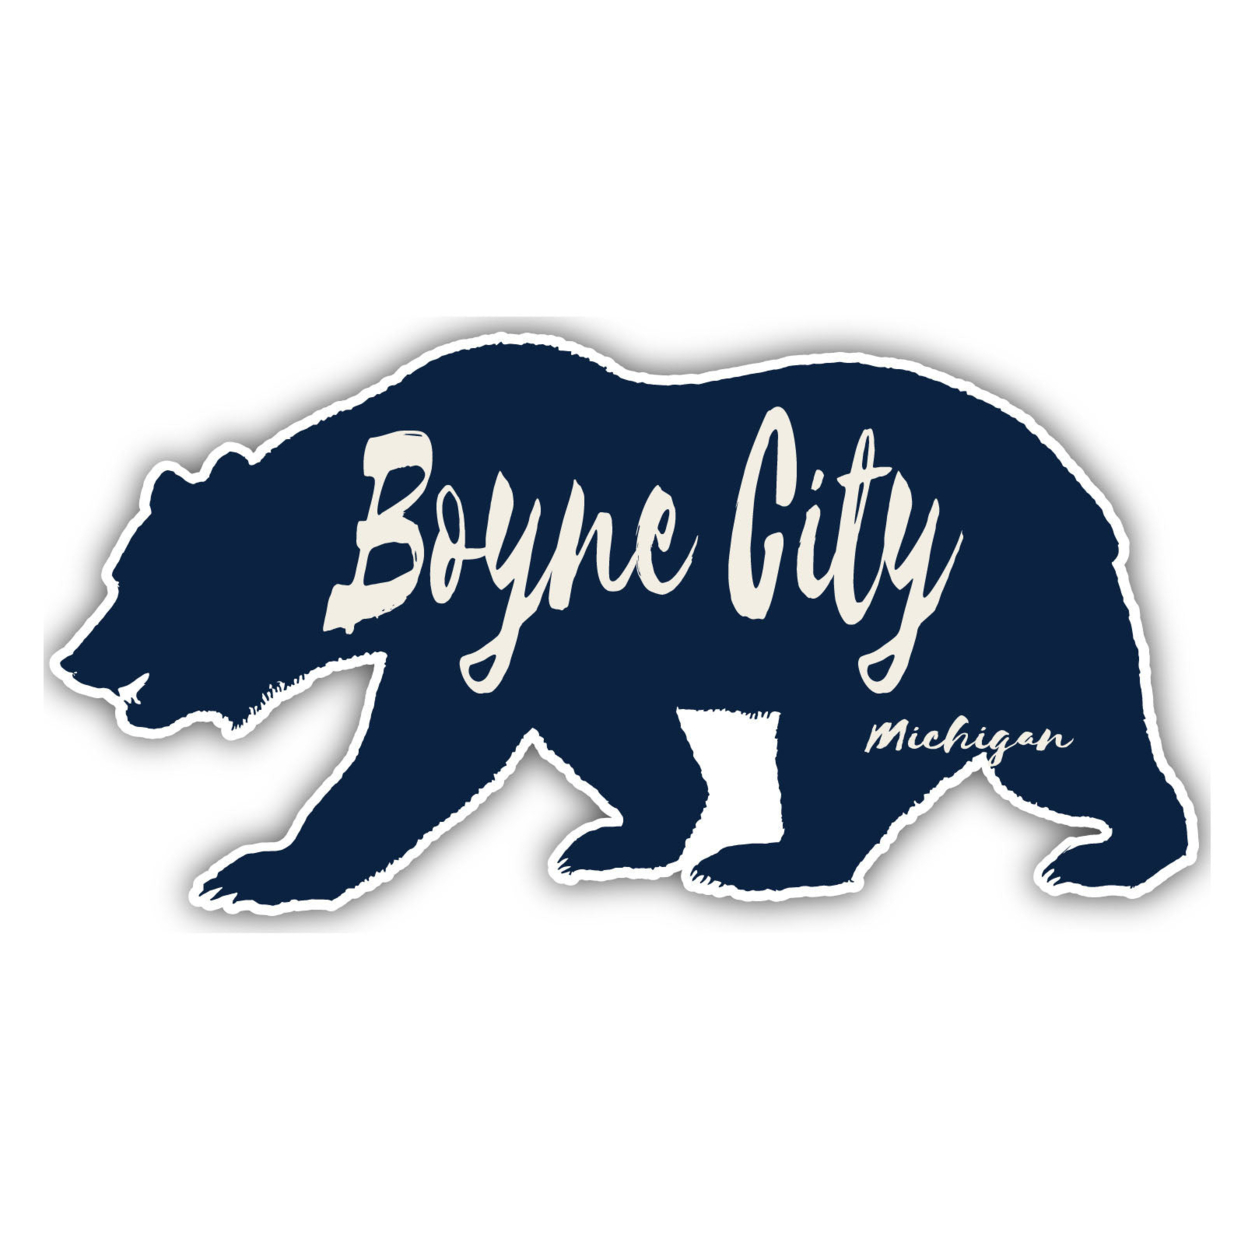 Boyne City Michigan Souvenir Decorative Stickers (Choose Theme And Size) - Single Unit, 4-Inch, Adventures Awaits